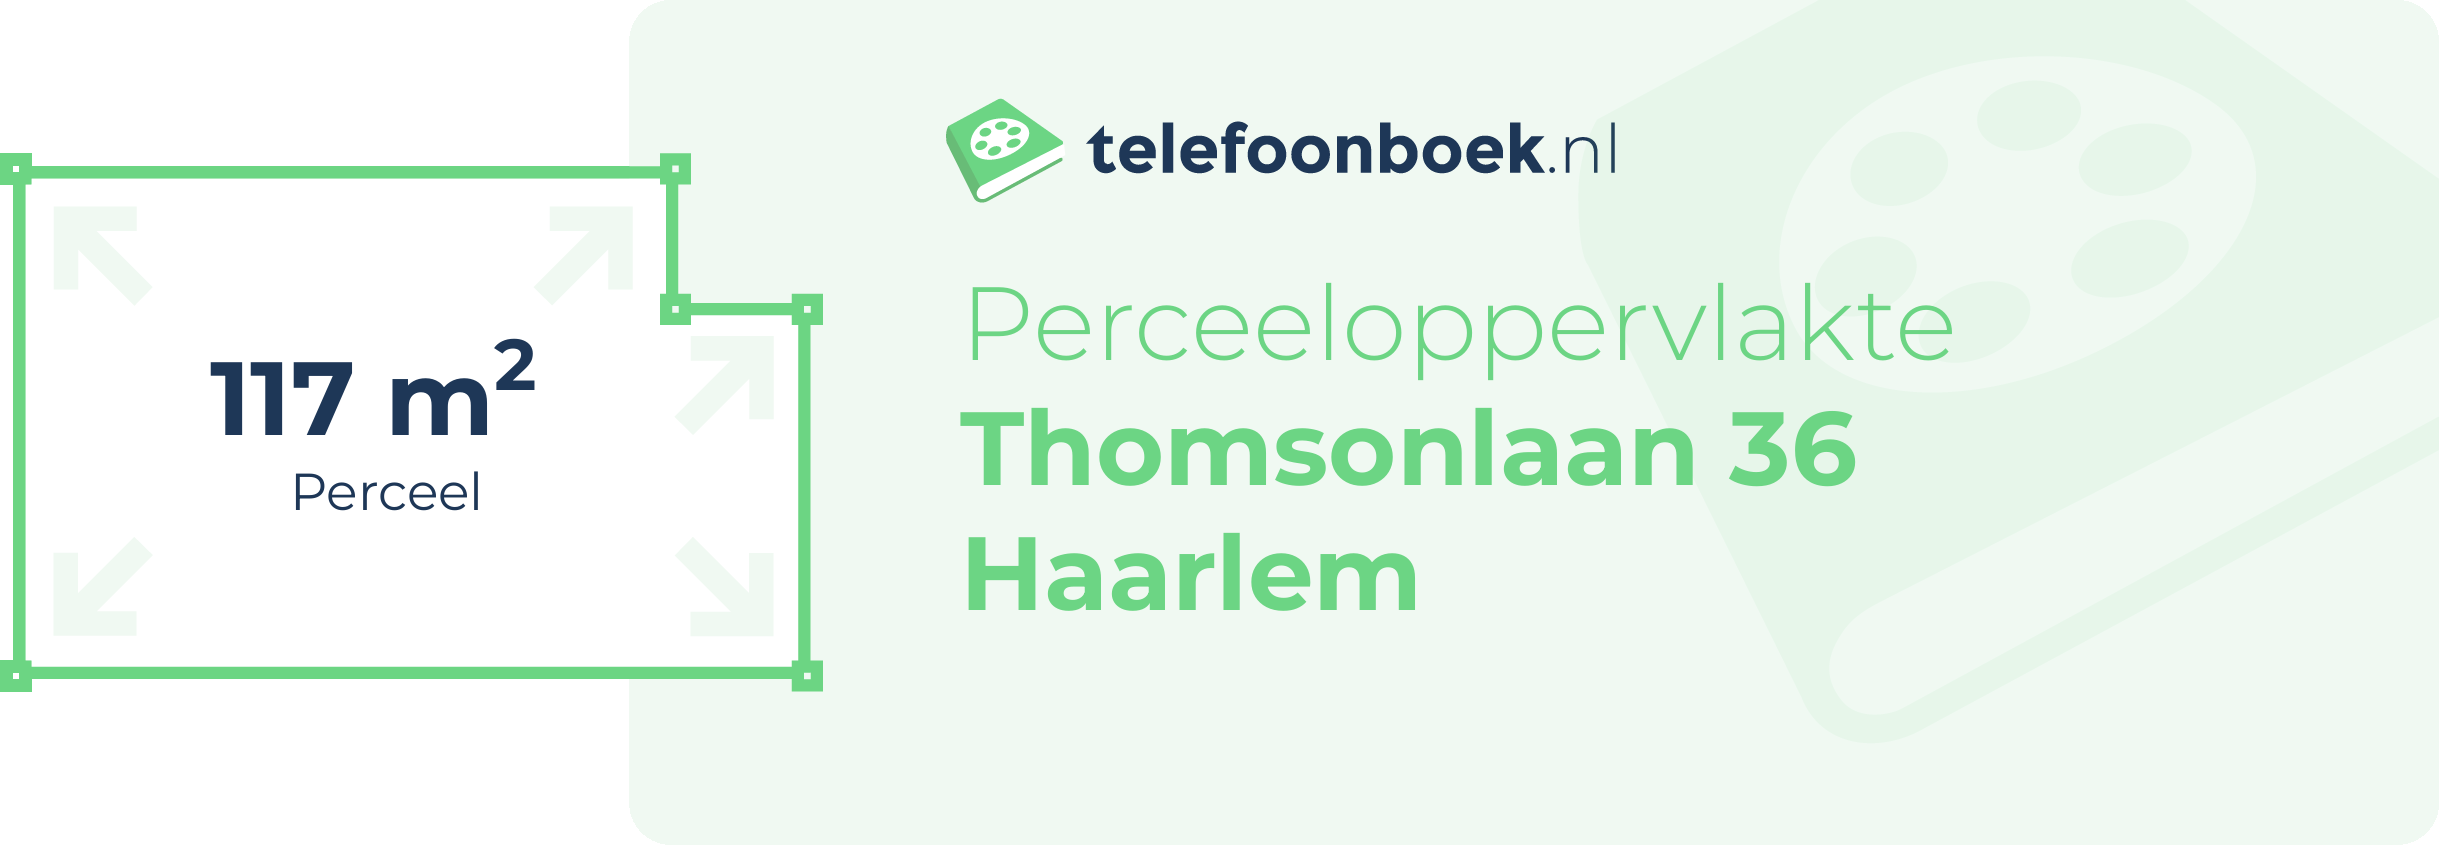 Perceeloppervlakte Thomsonlaan 36 Haarlem